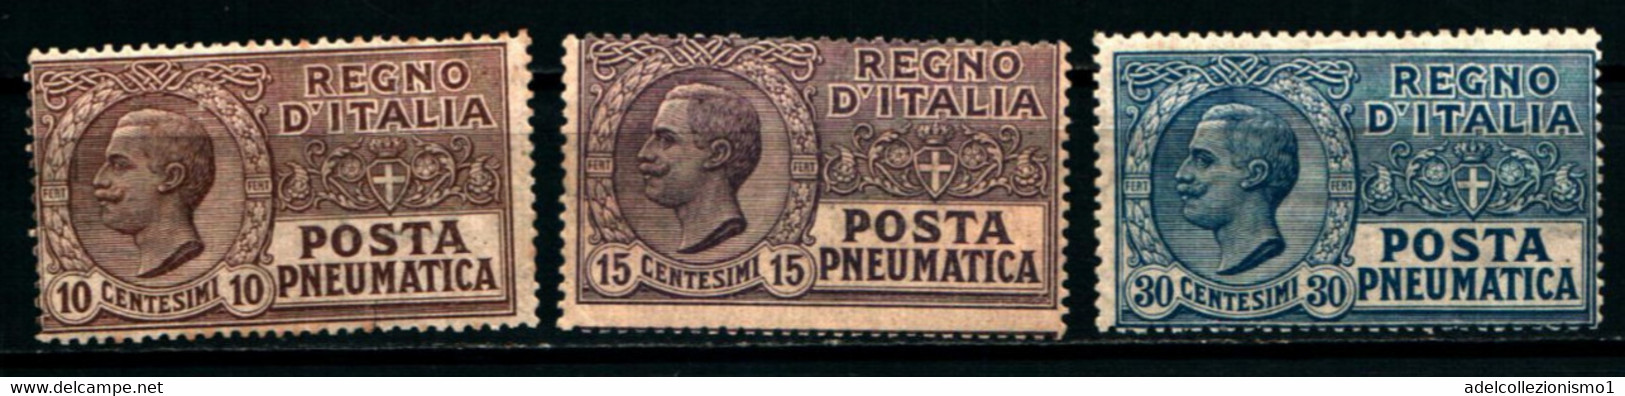 40174) ITALIA-Pneumatica Tipo Leoni - POSTA PNEUMATICA - 1913/1923 SERIE COMPLETA- MLH* - Pneumatische Post